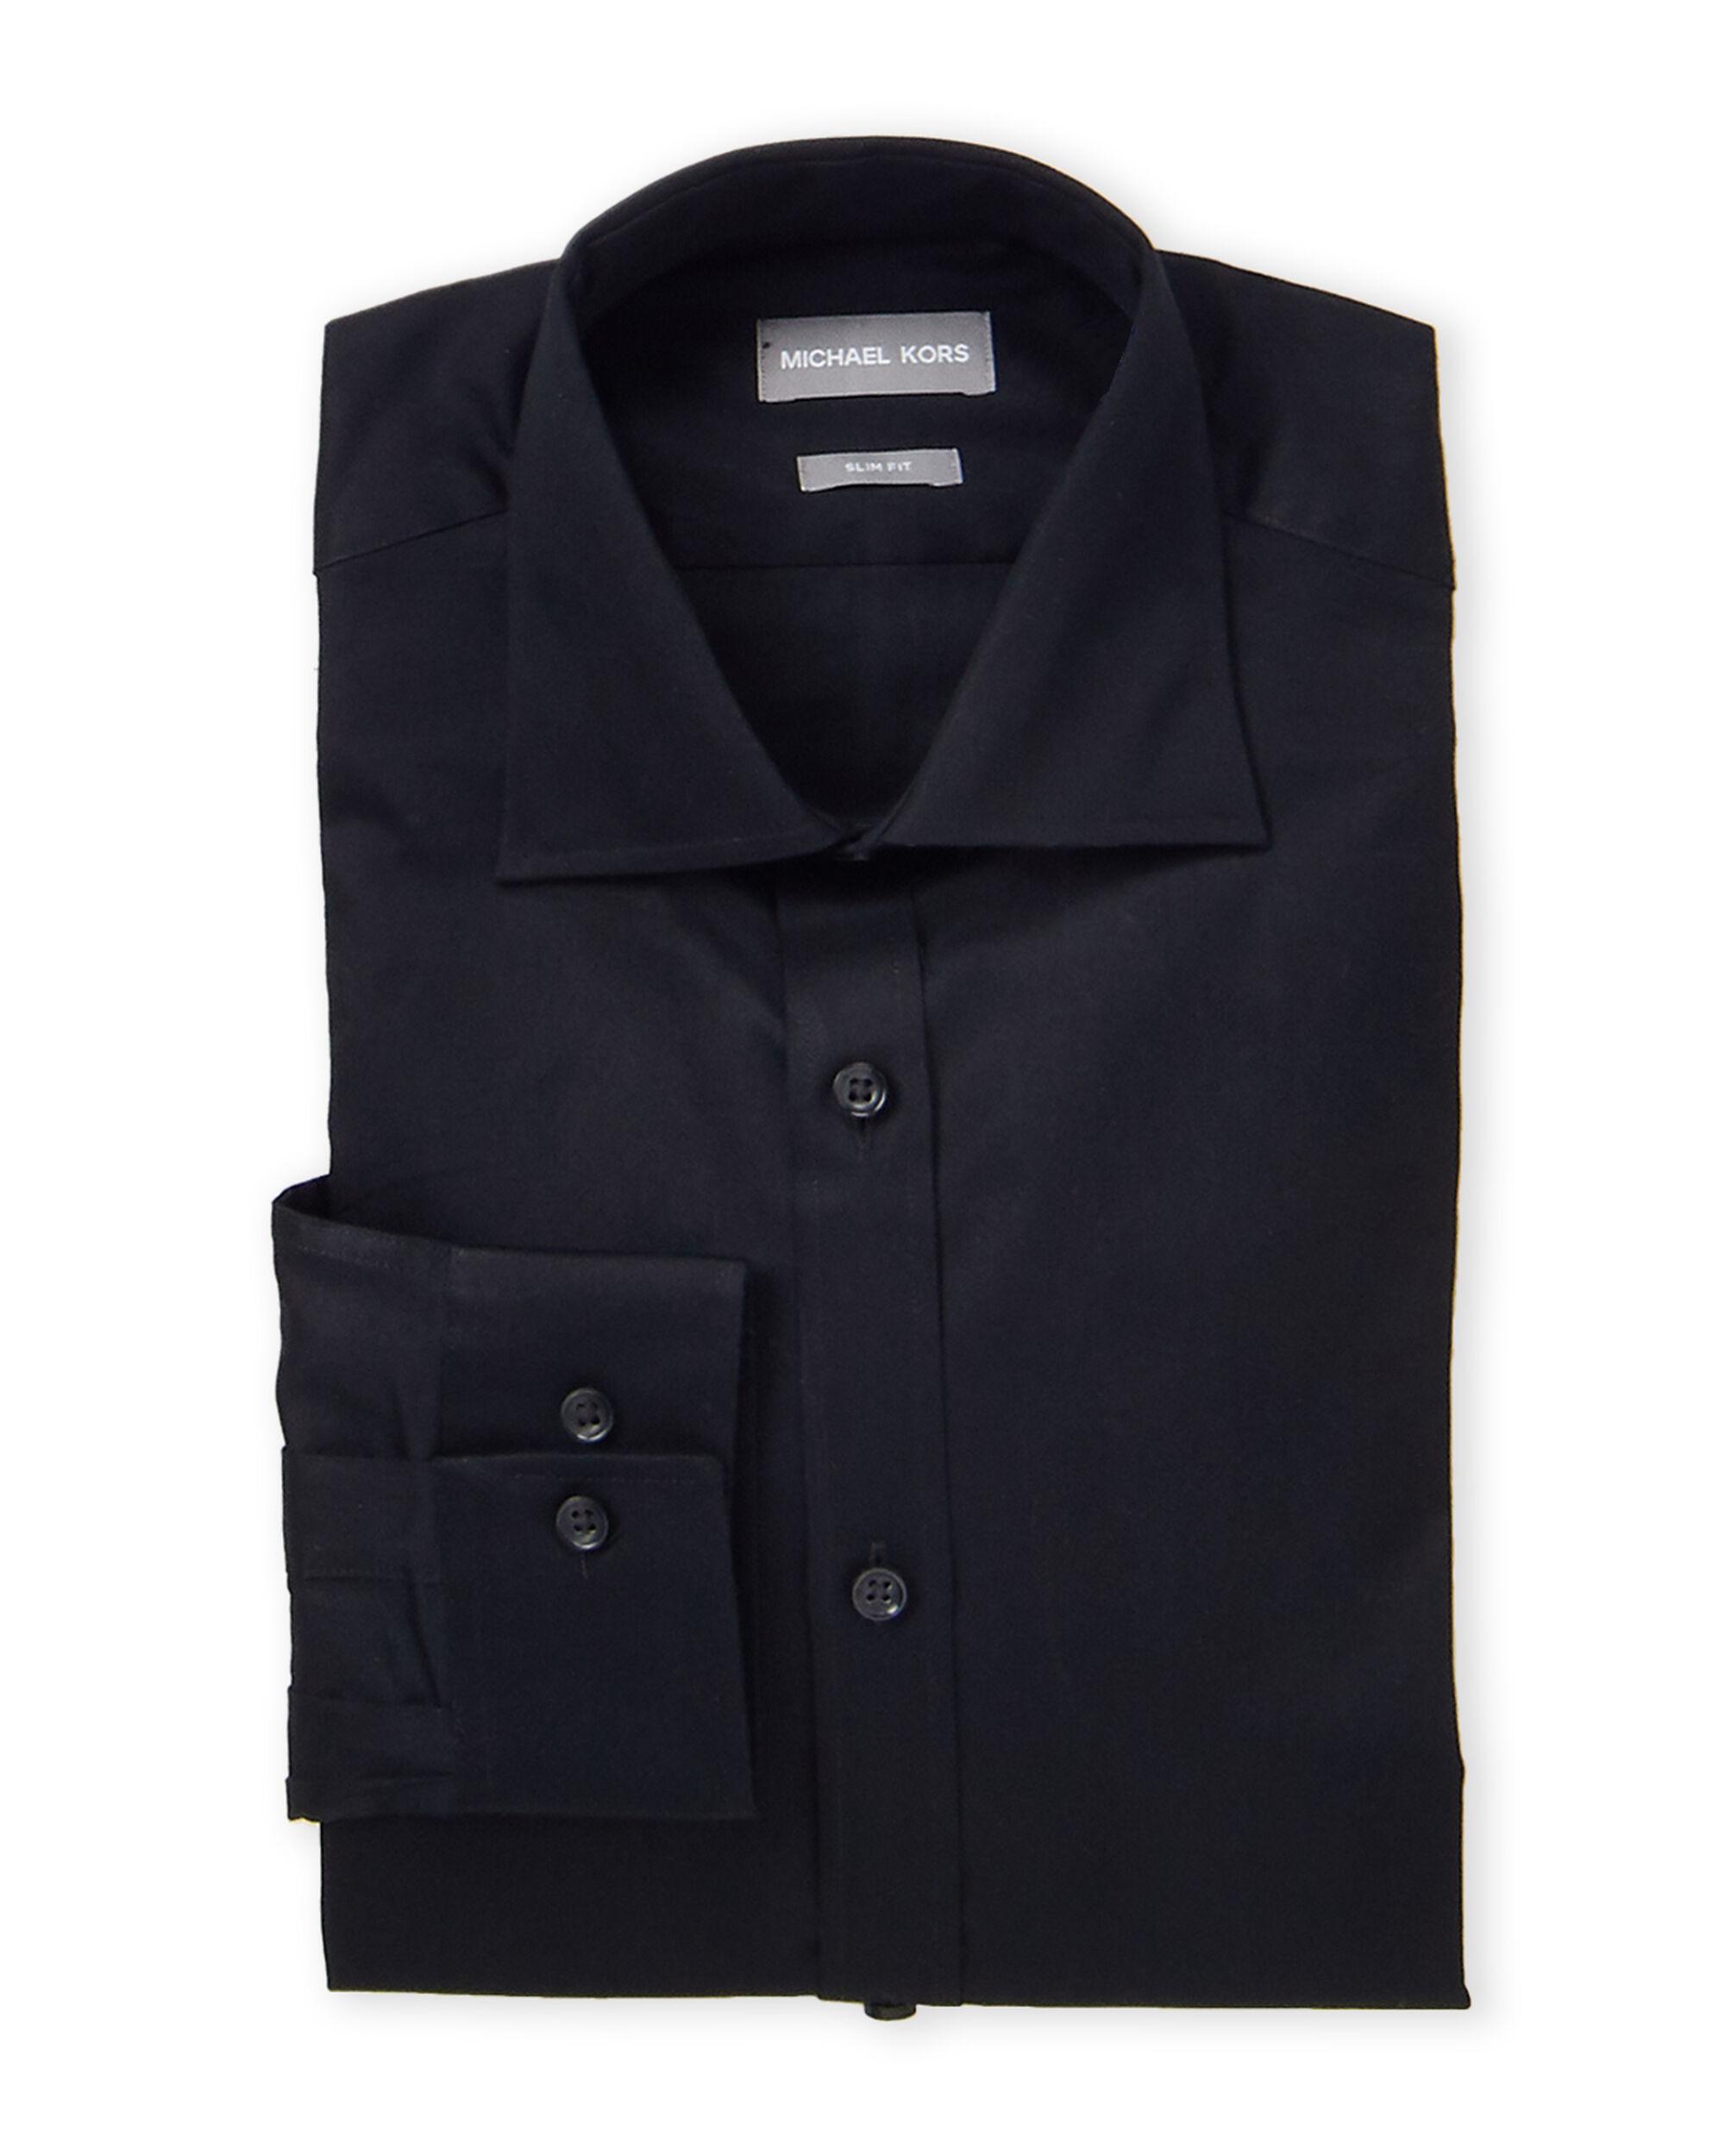 Michael Kors Cotton Black Slim Fit Dress Shirt for Men - Save 52% - Lyst